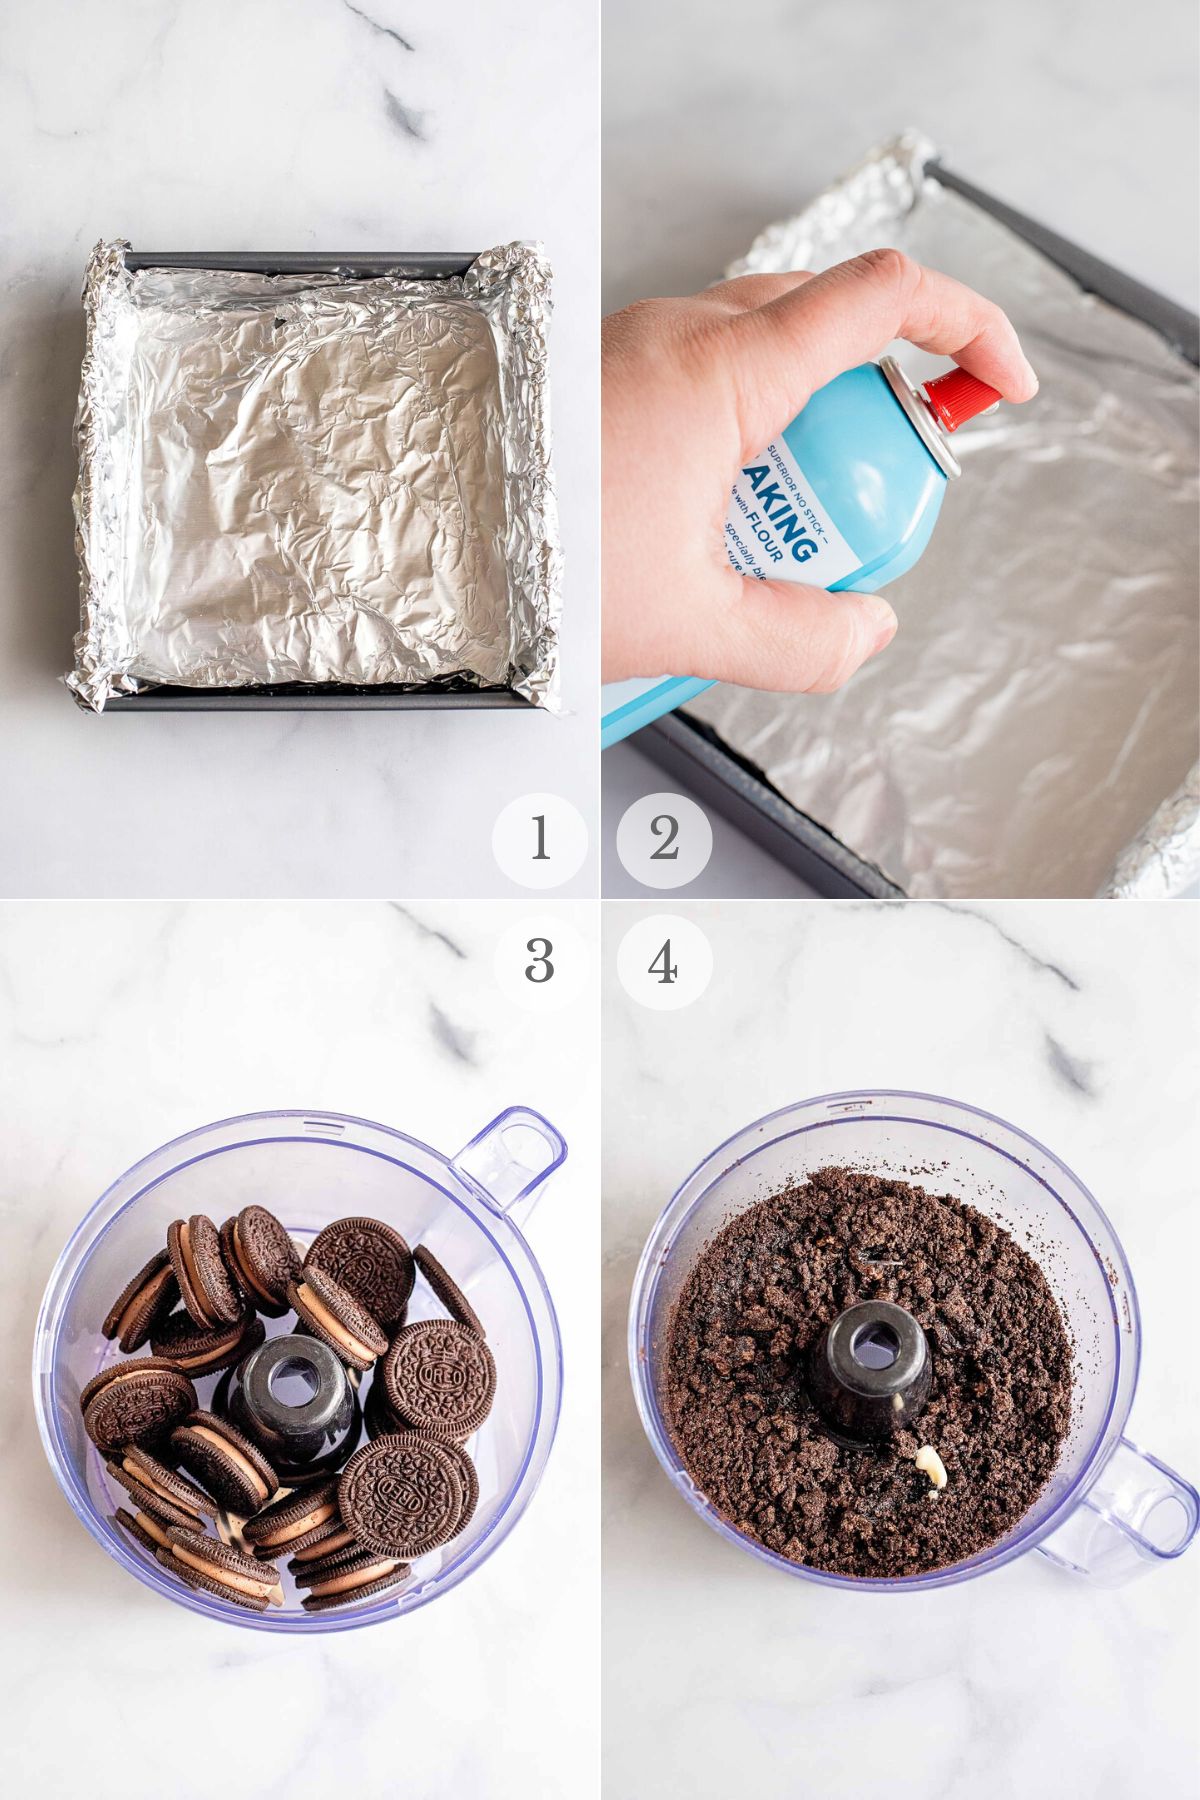 cheesecake bars recipe steps 1-4.